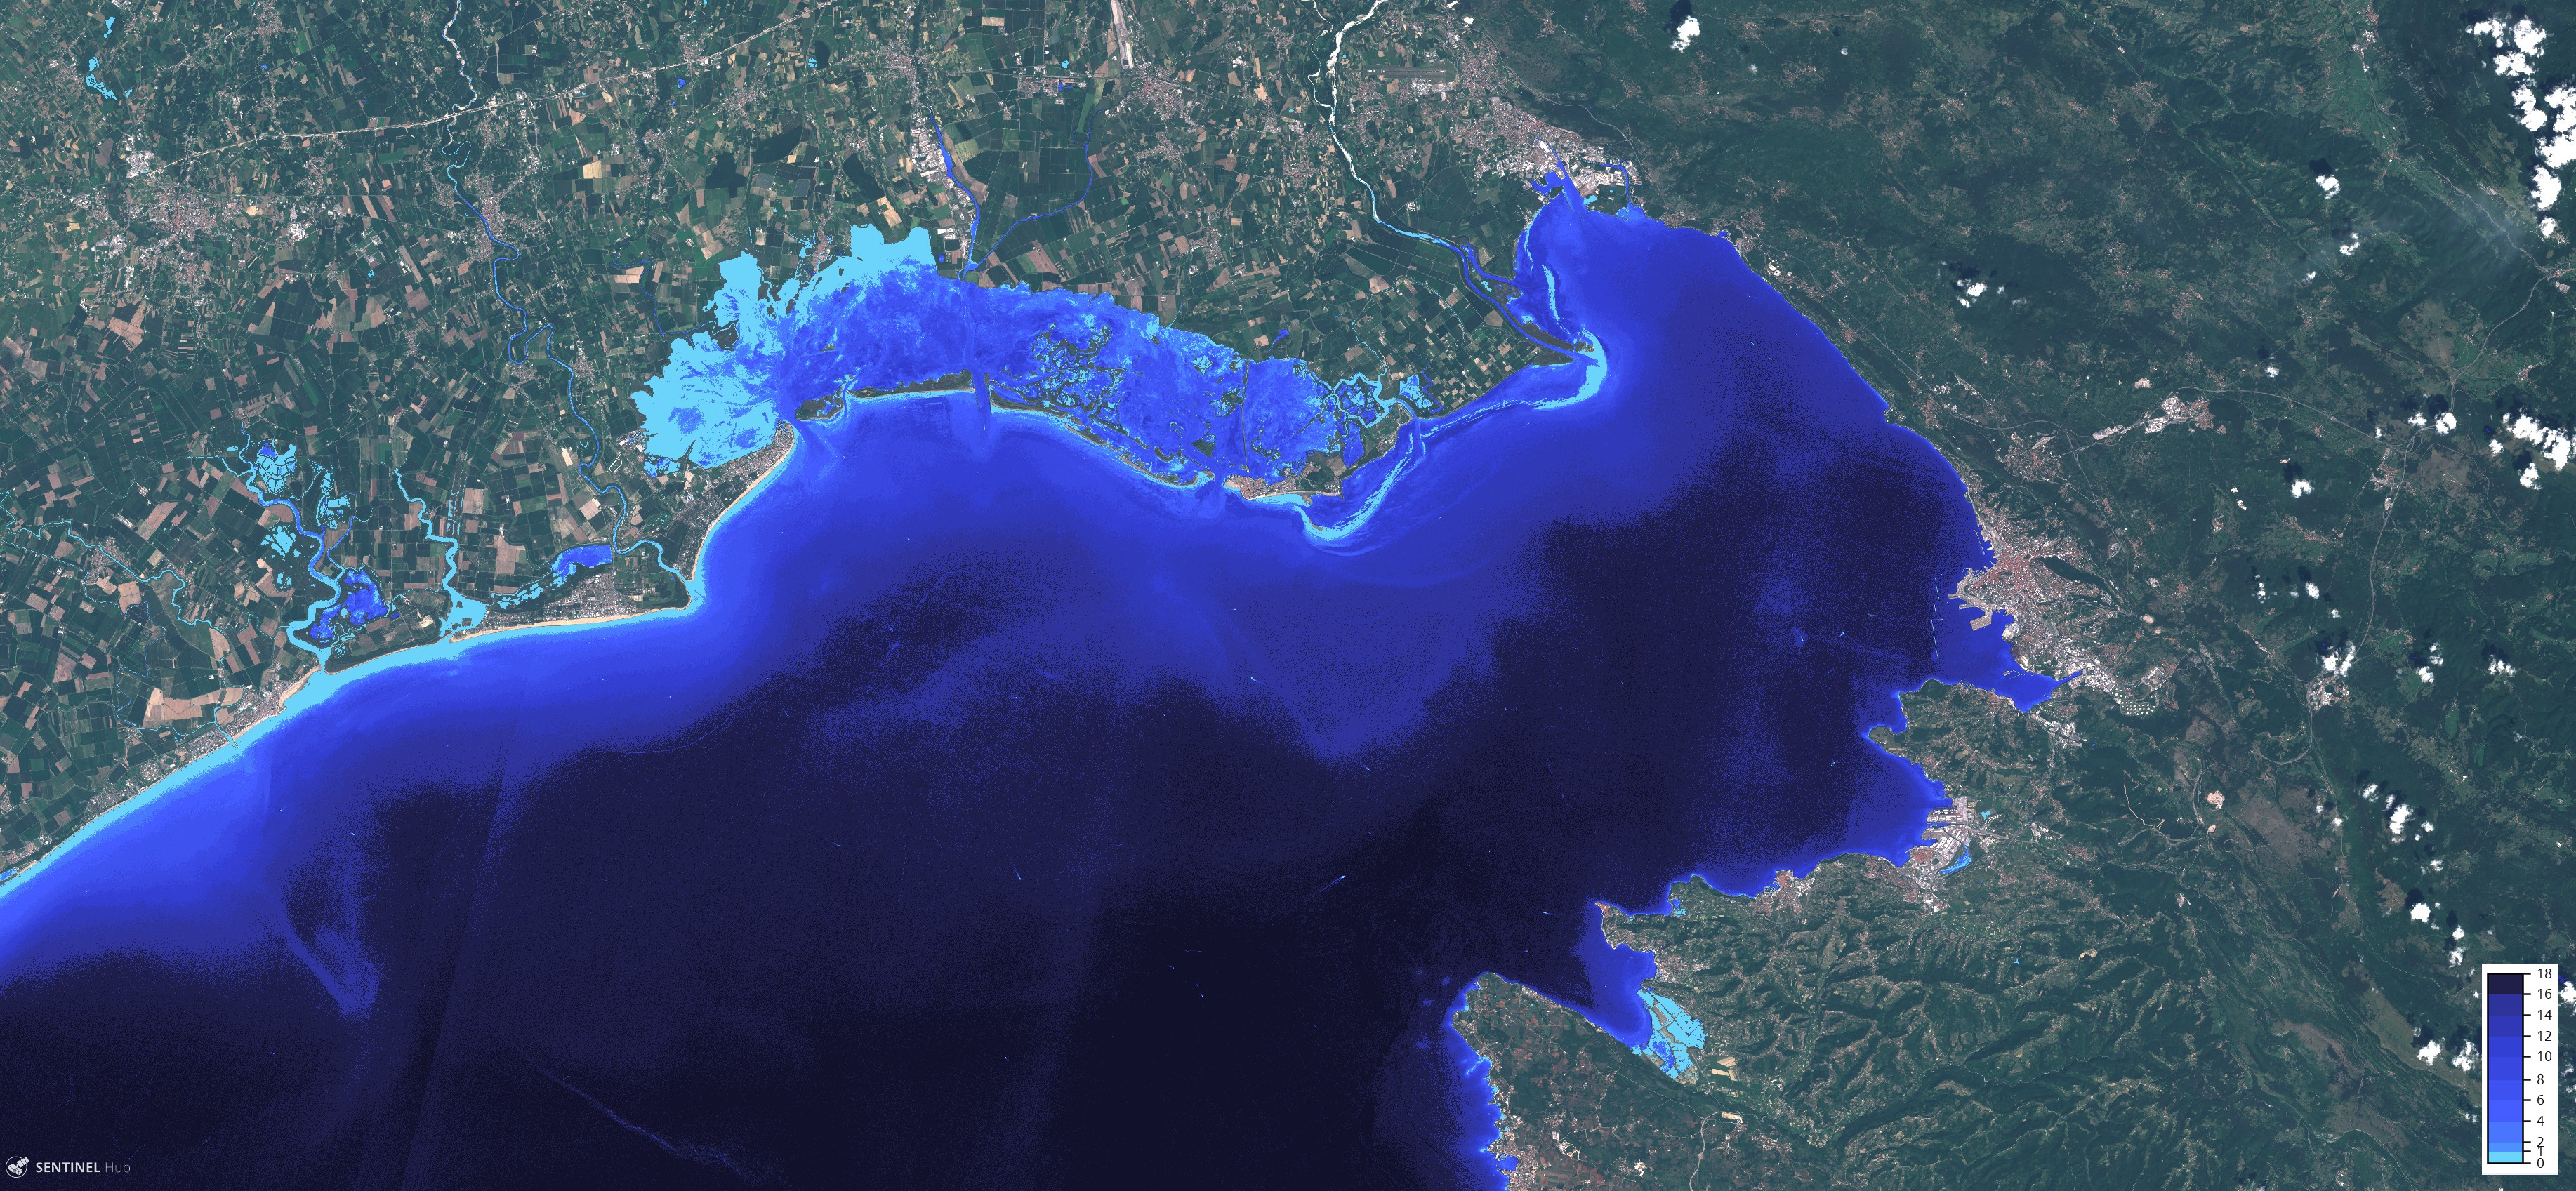 The Gulf of Trieste, Northern Adriatic Sea